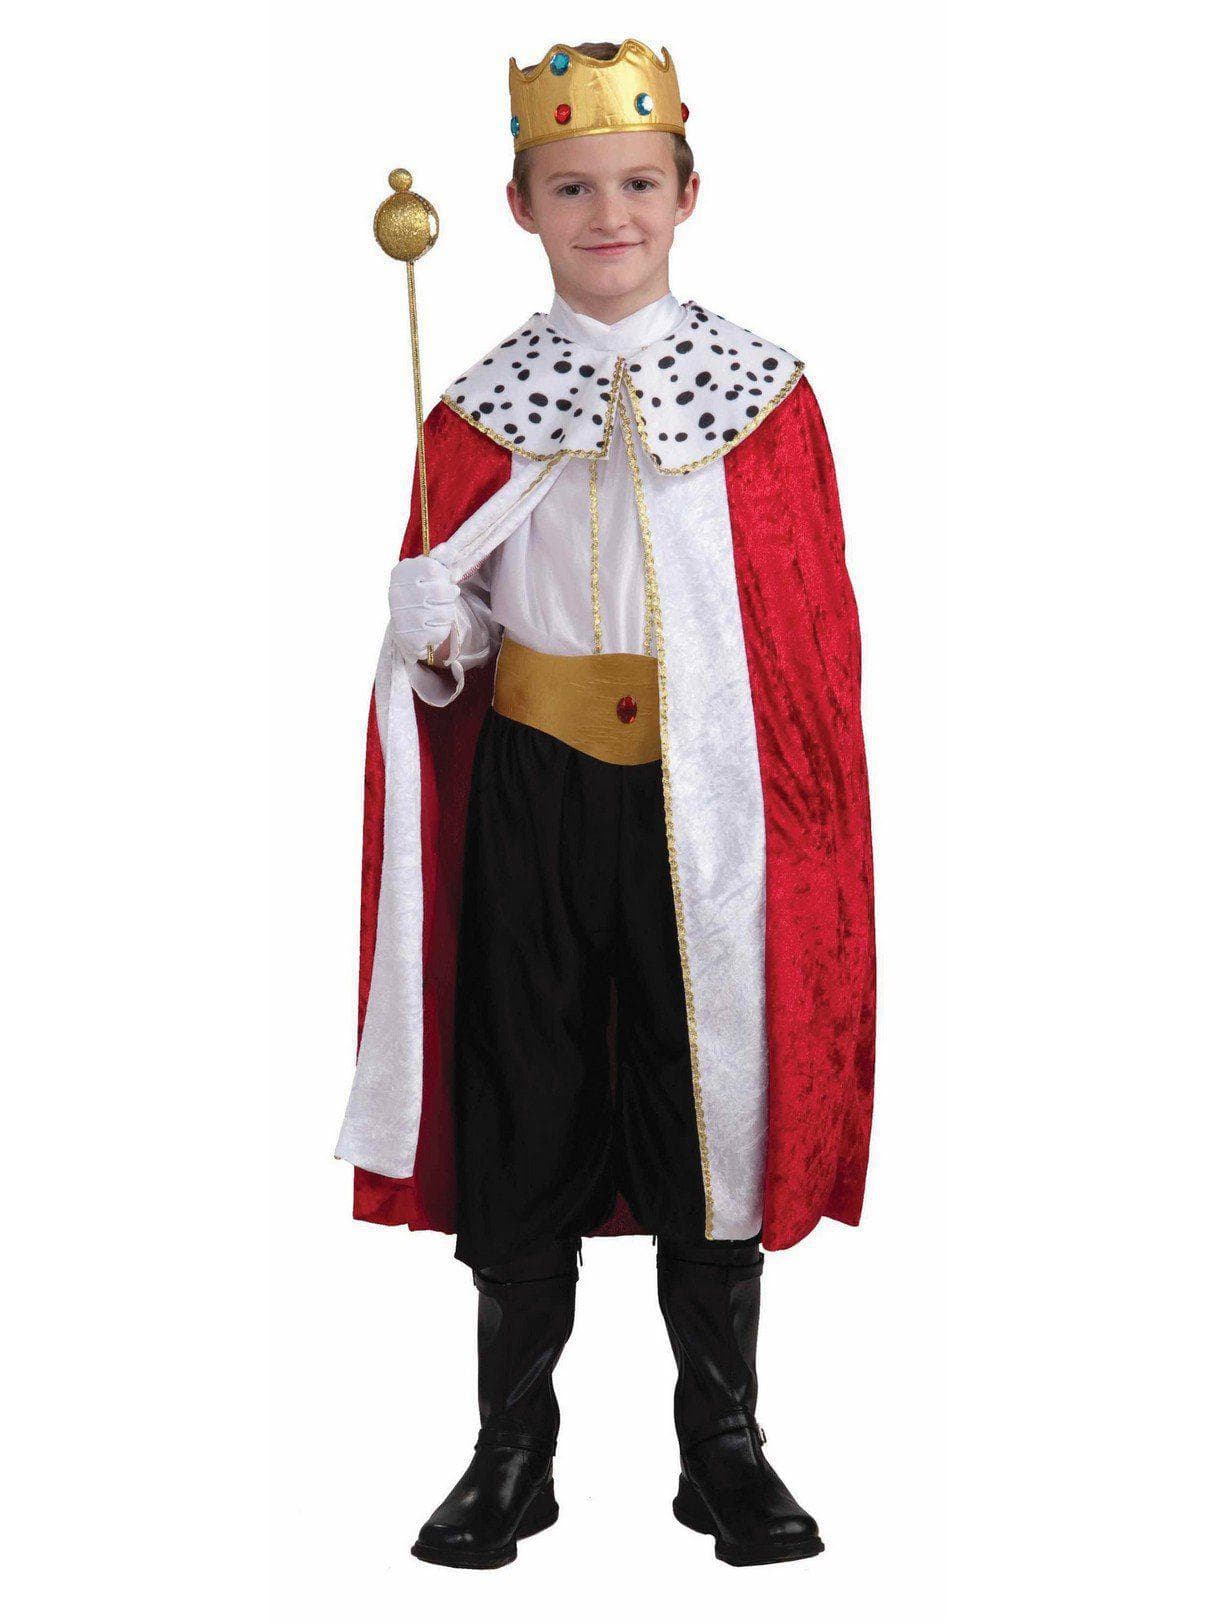 Kids' Red Regal King Costume - costumes.com